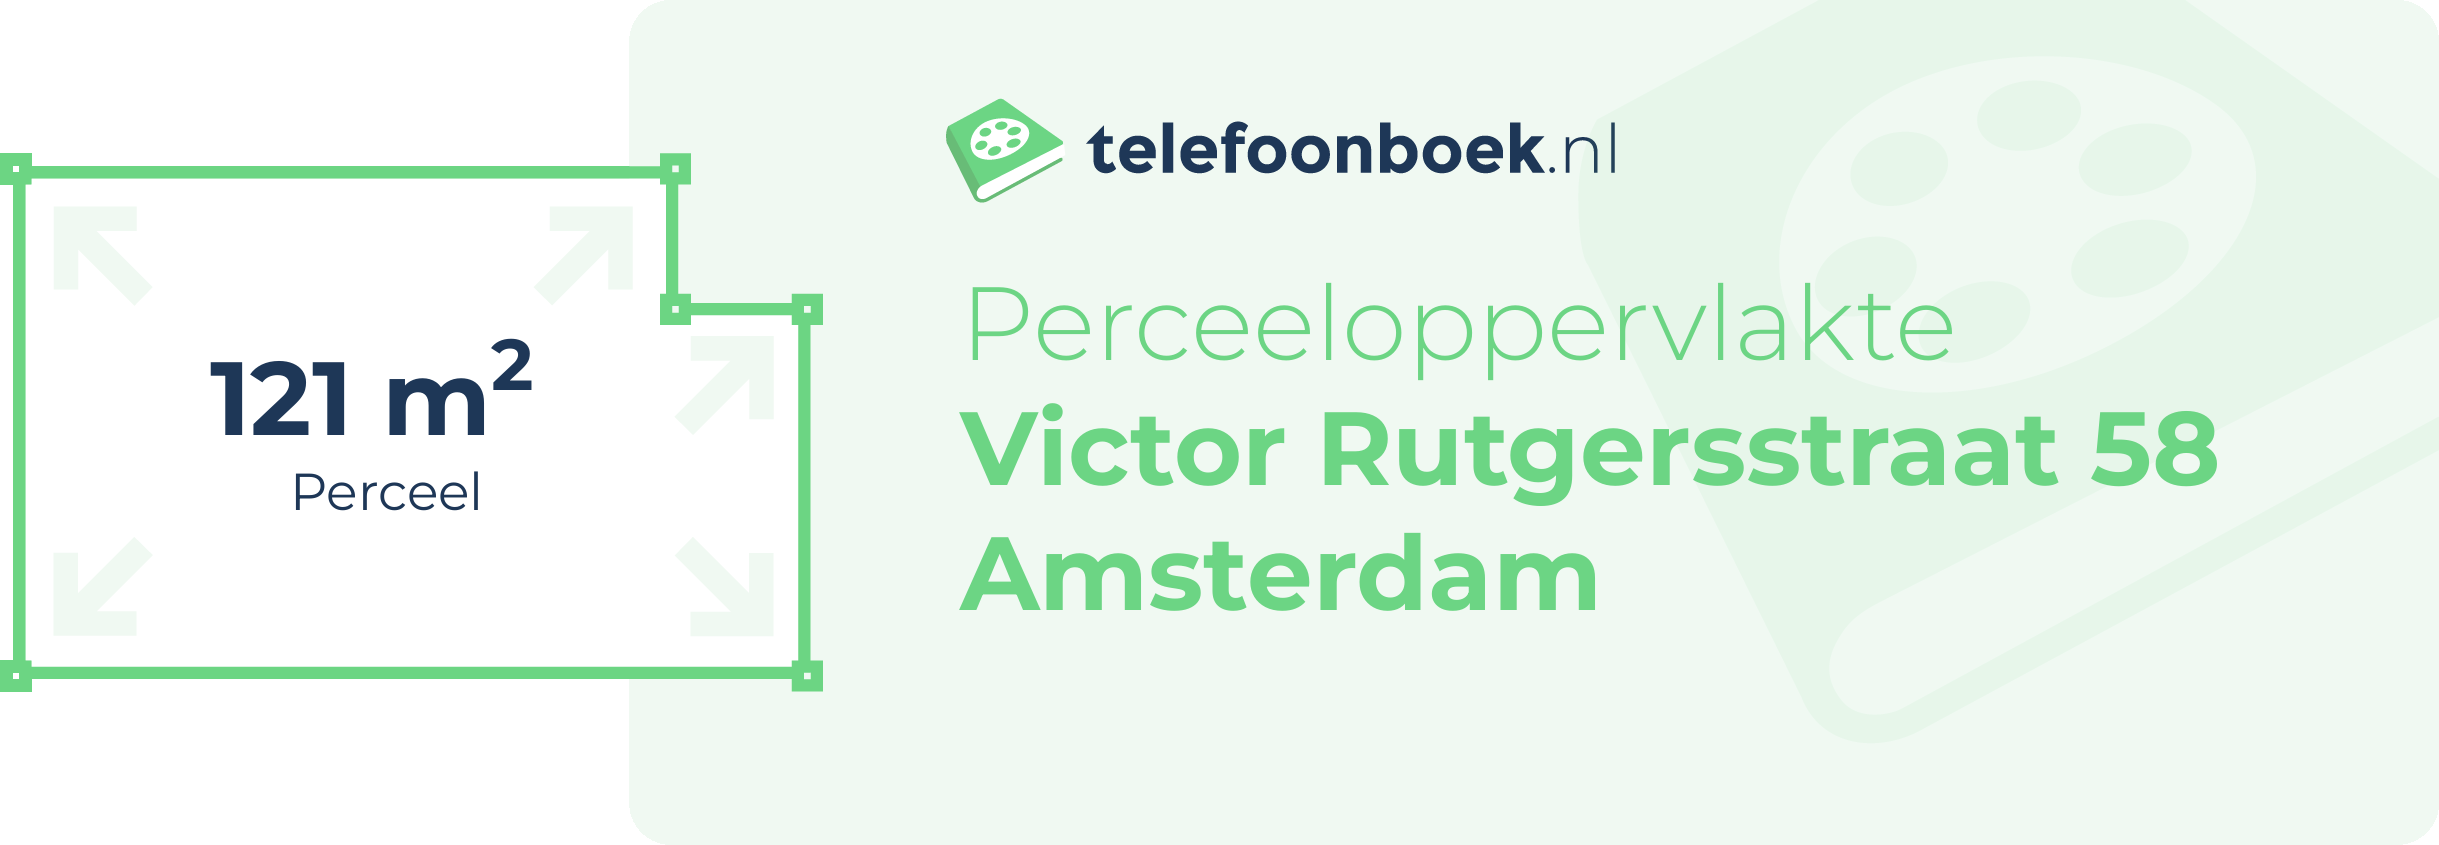 Perceeloppervlakte Victor Rutgersstraat 58 Amsterdam